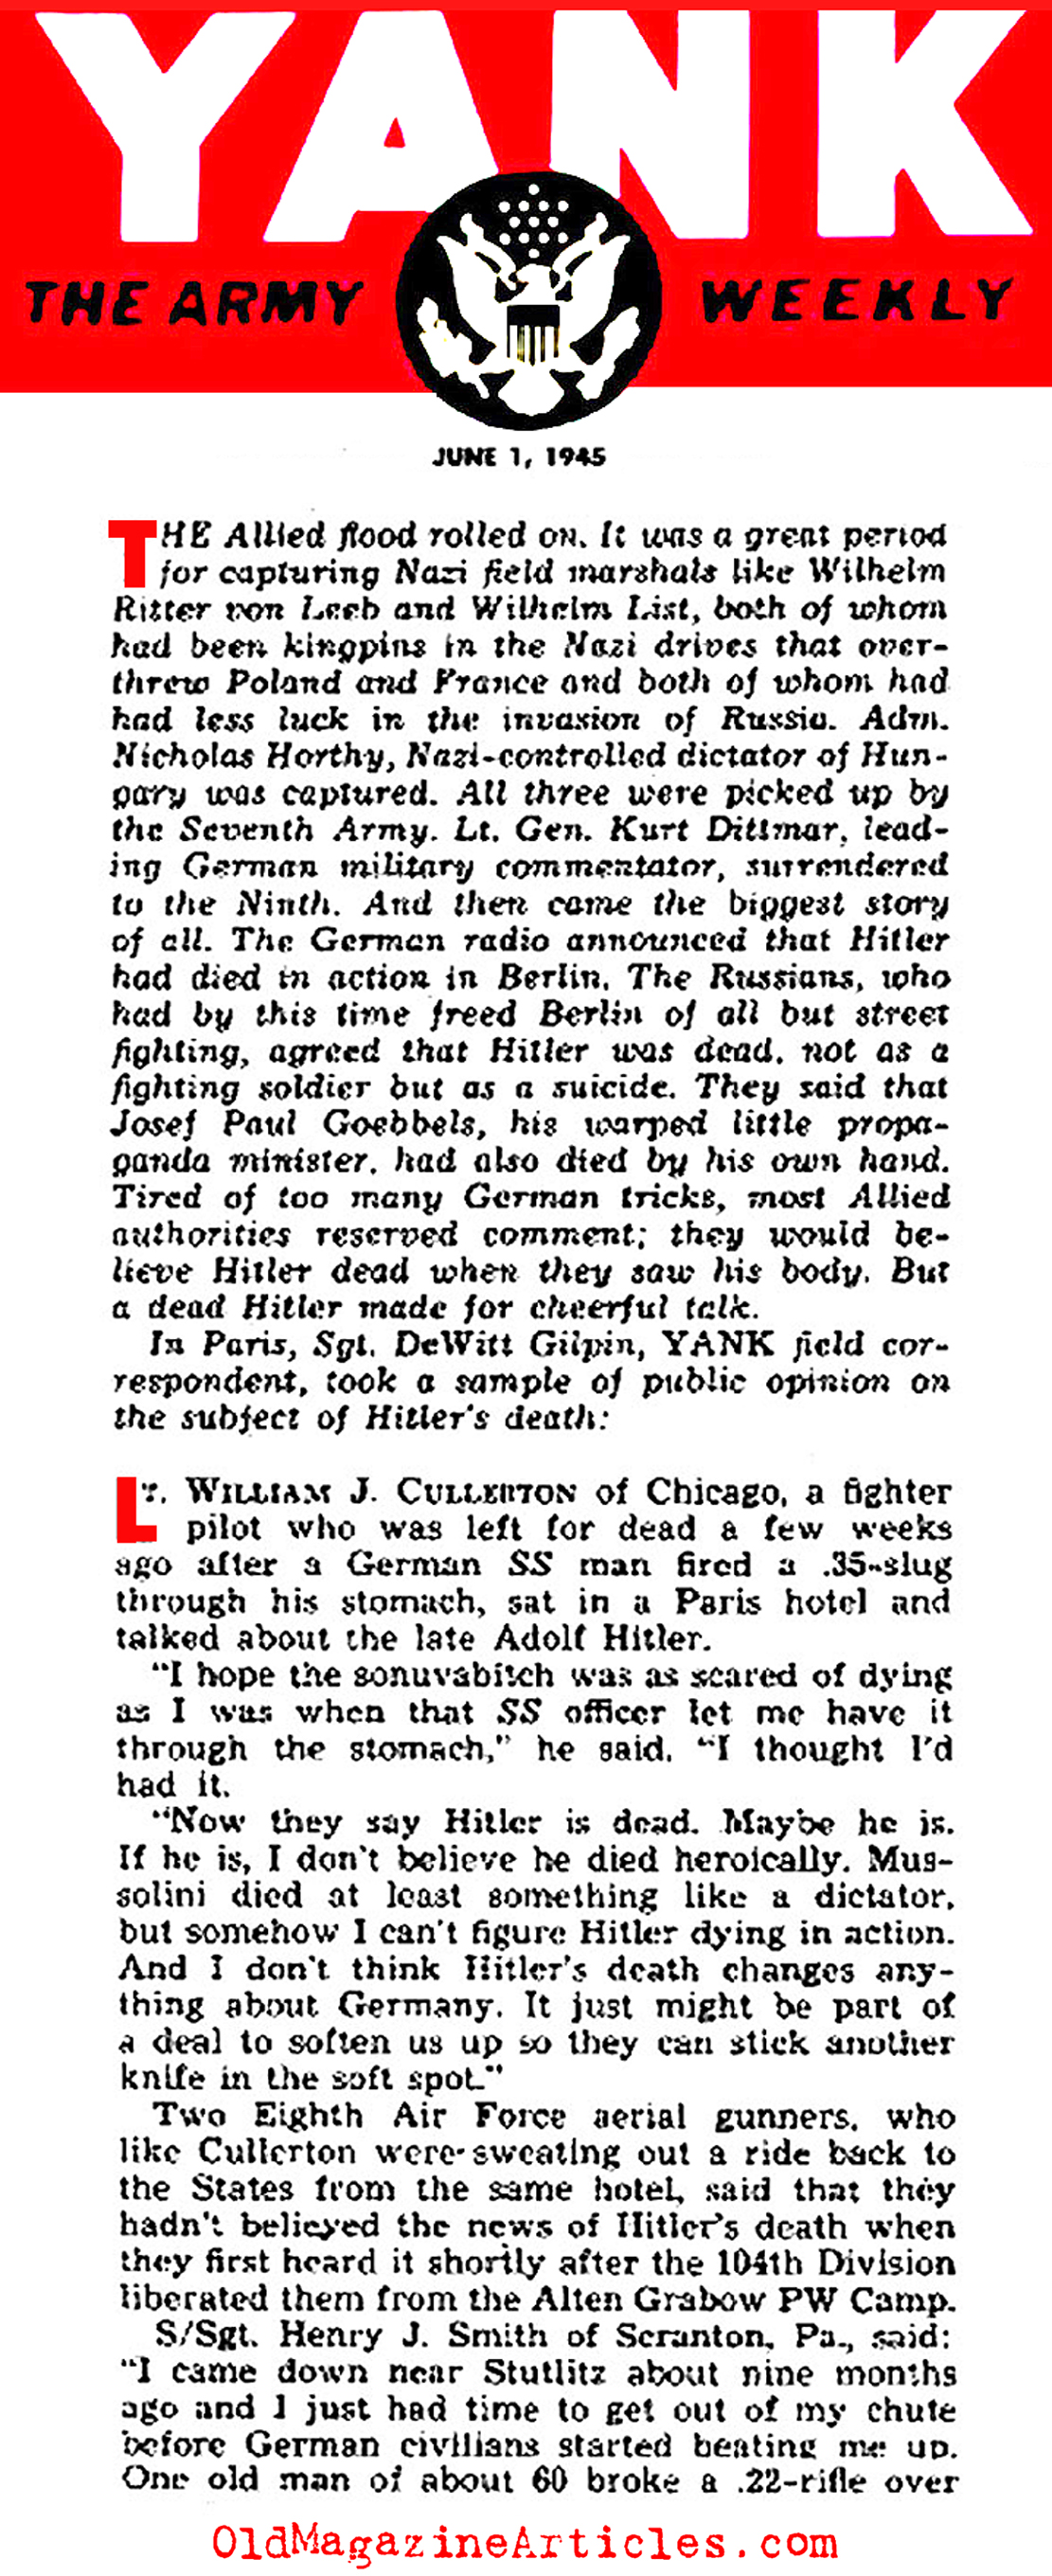 The News of Hitler's Death (Yank Magazine, 1945)